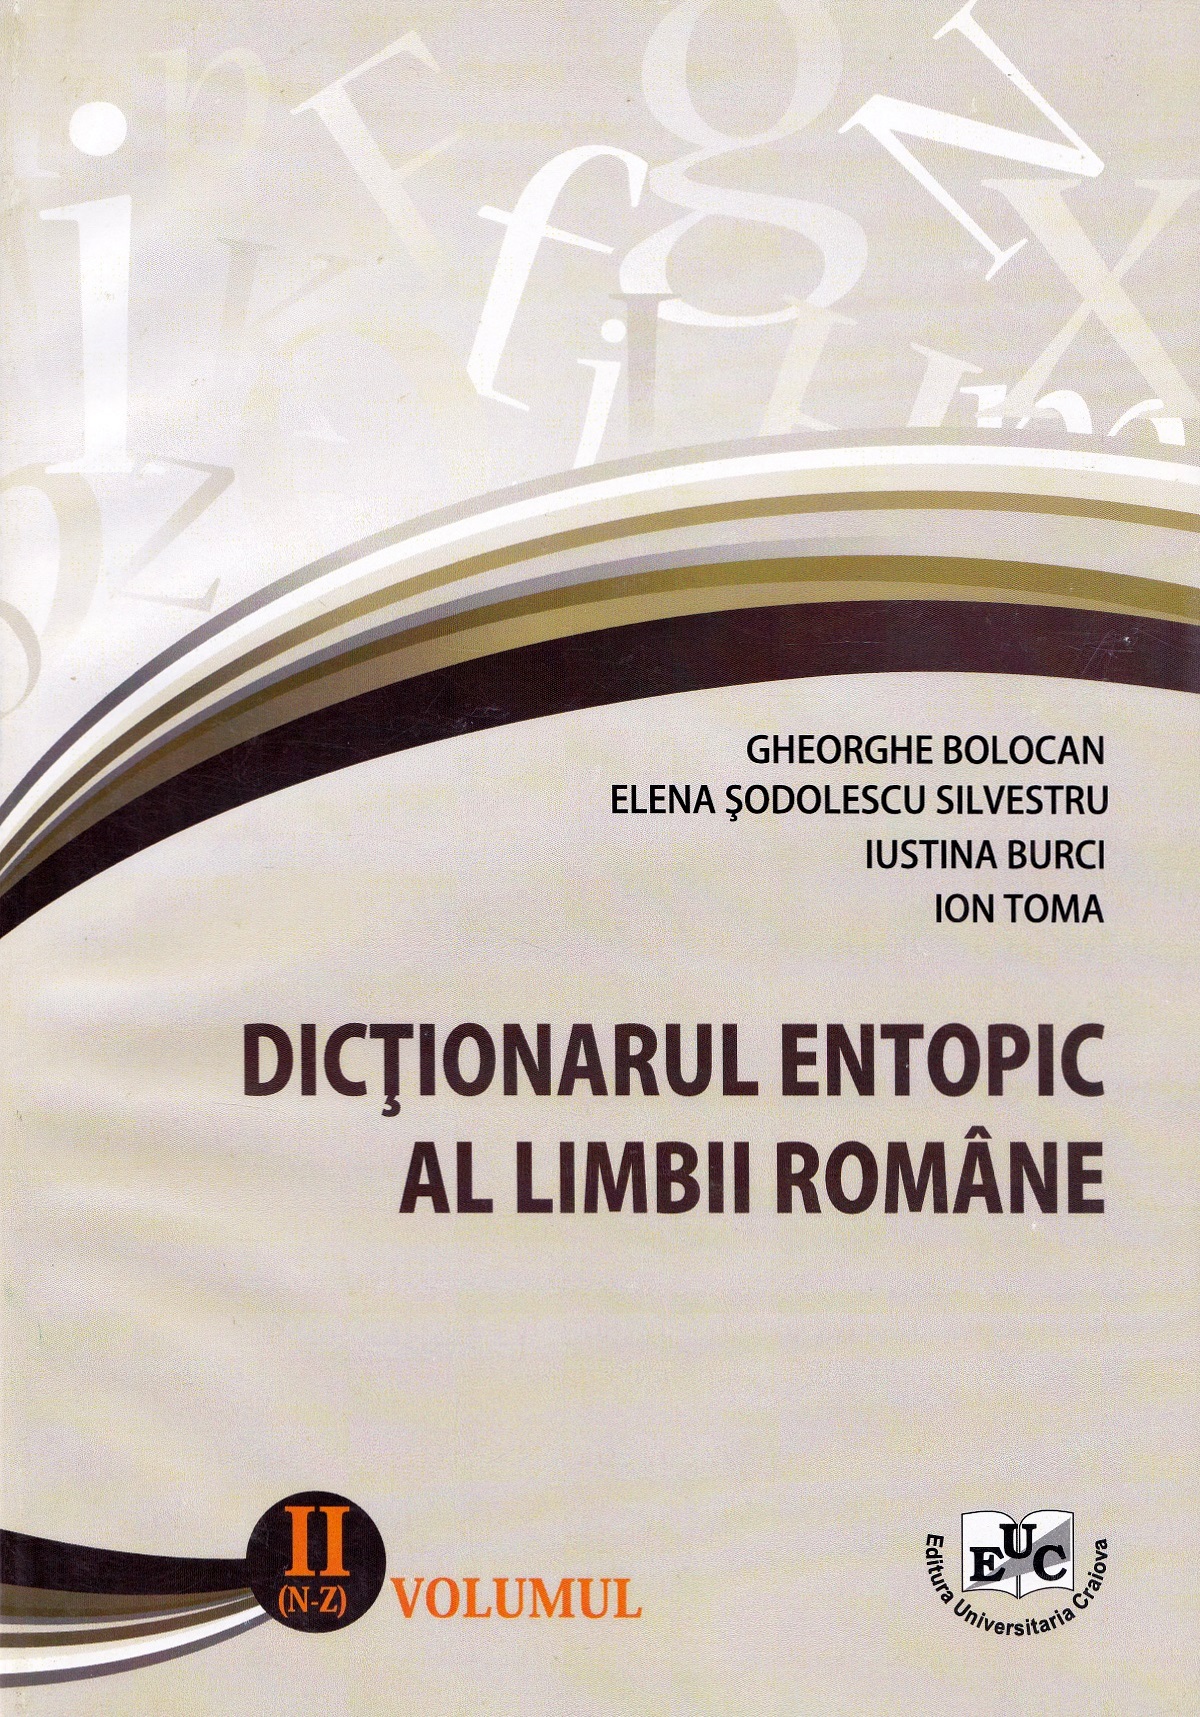 Dictionar entopic al limbii romane Vol.2 - Gheorghe Bolocan, Elena Sodolescu Silvestru